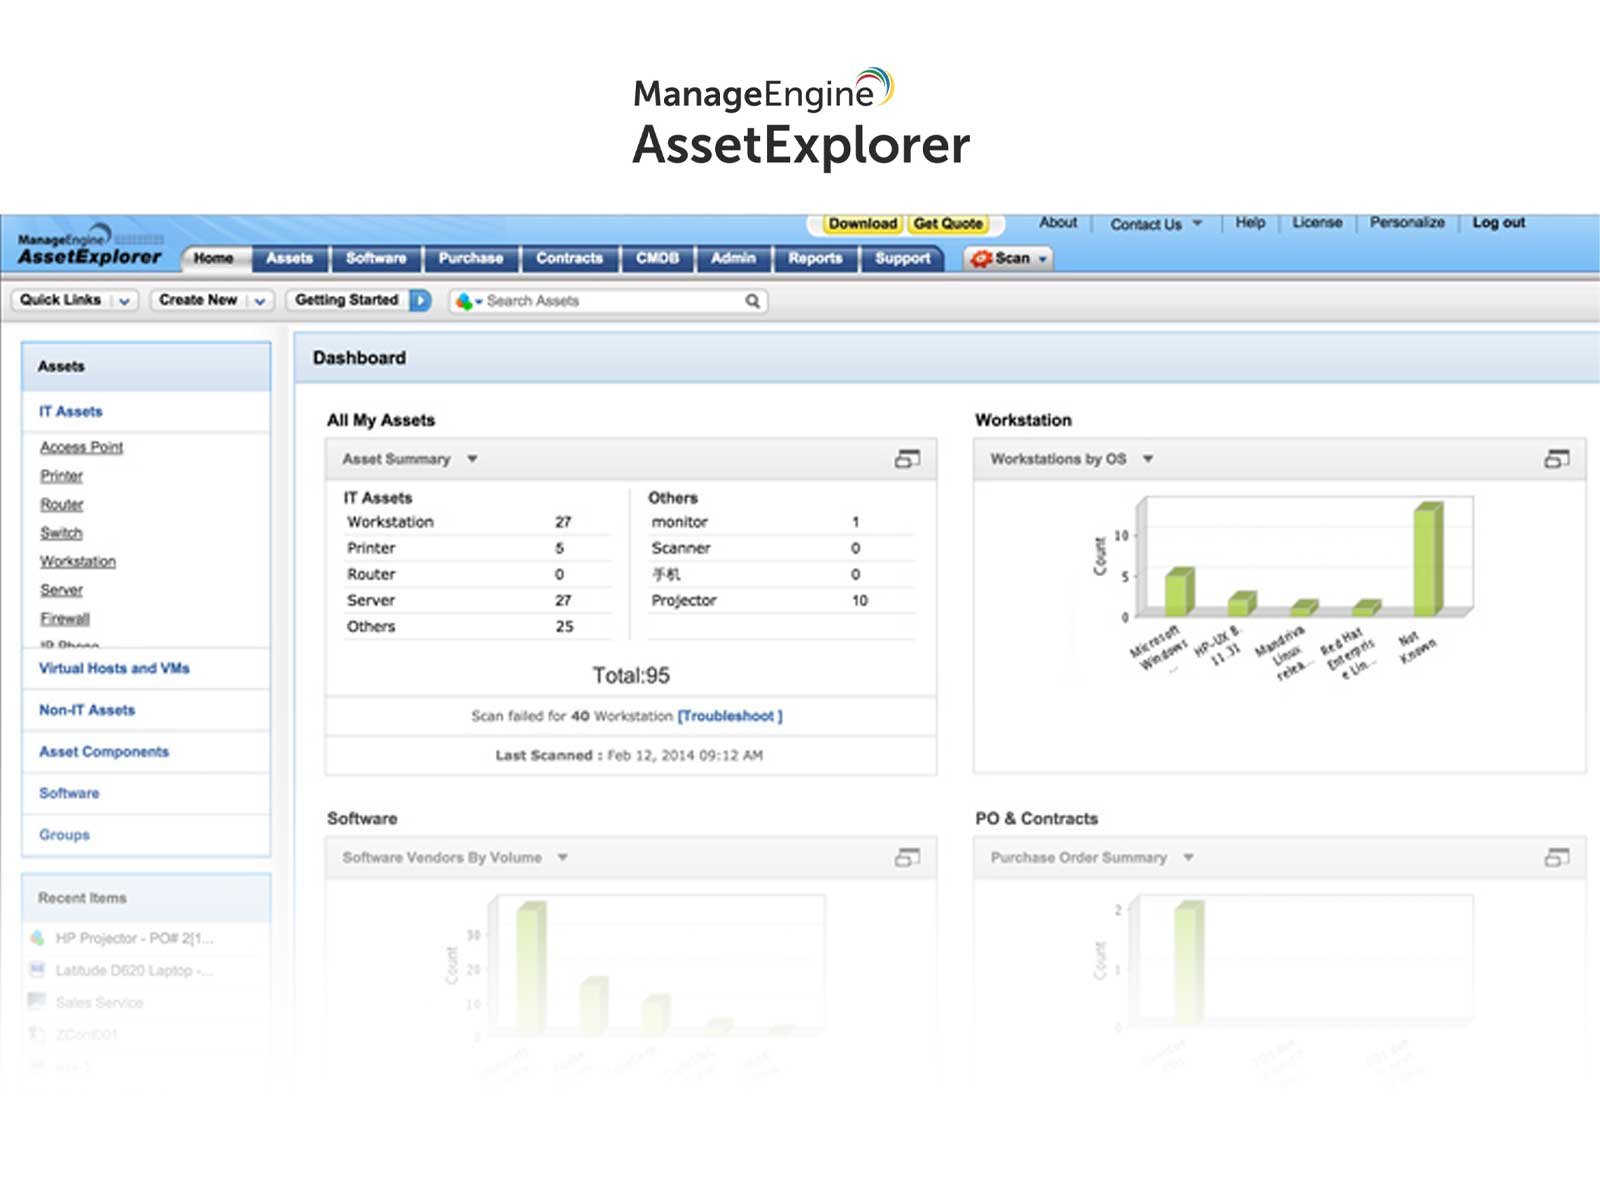 Example of ManageEngine Asset Explorer's interface.